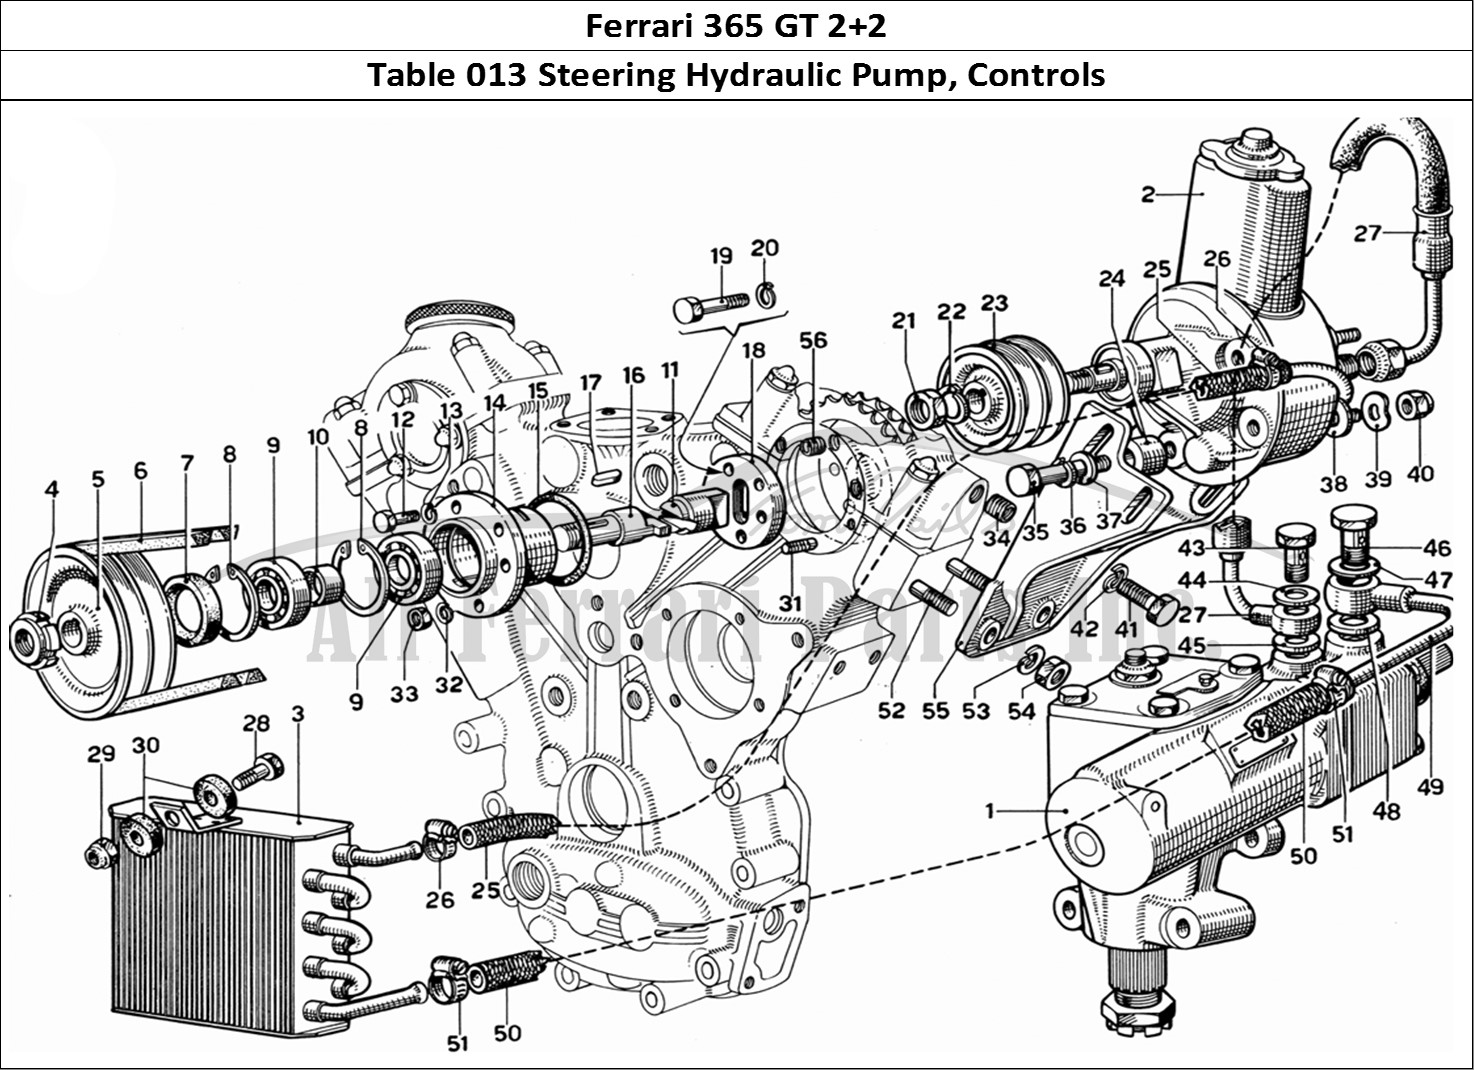 Ferrari Parts Ferrari 365 GT 2+2 (Mechanical) Page 013 Hydraulic Steering Pump a